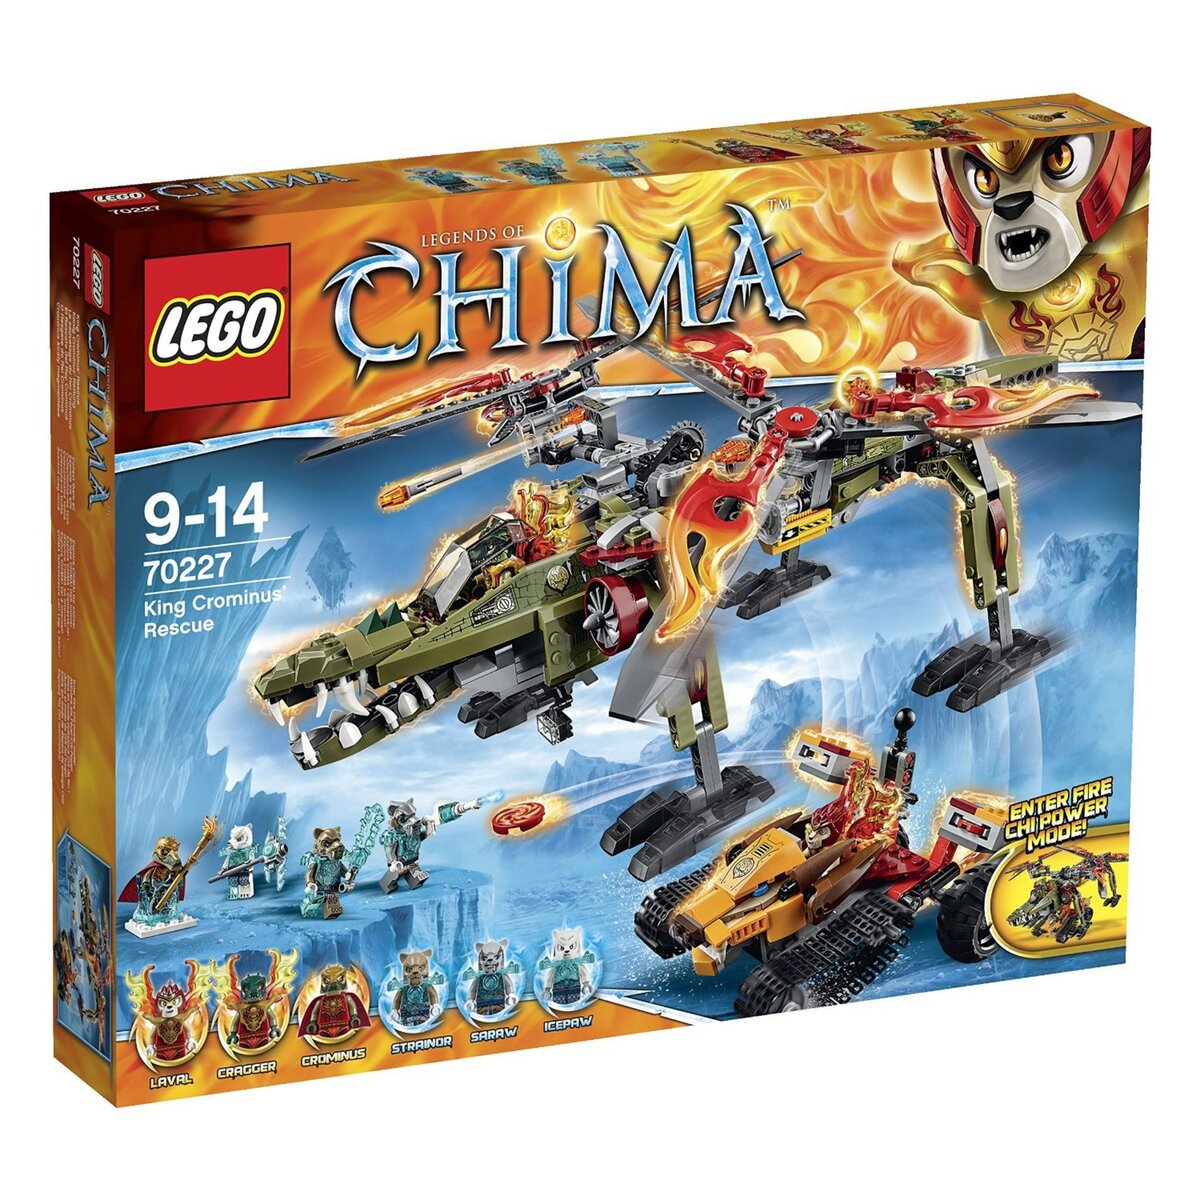 LEGO Legends of Chima 70227